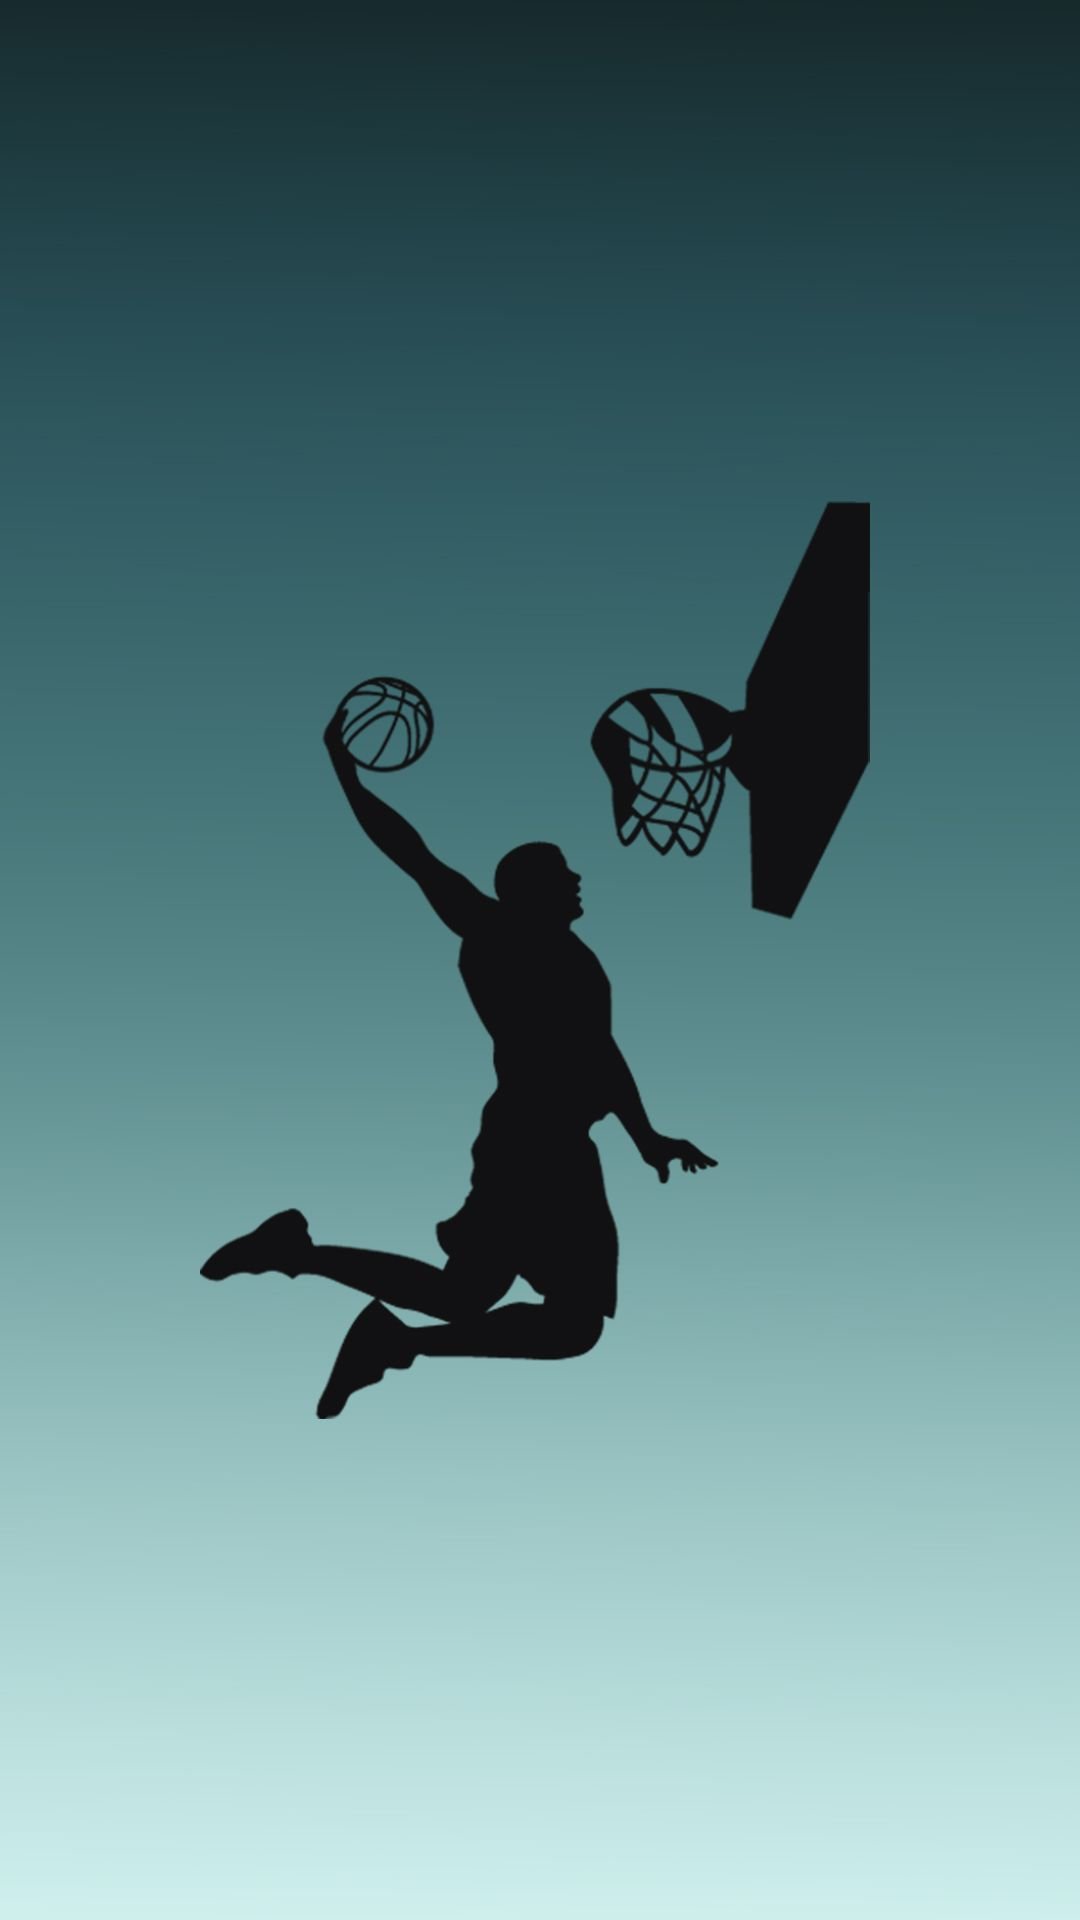 Aesthetic basketball Wallpaper Download